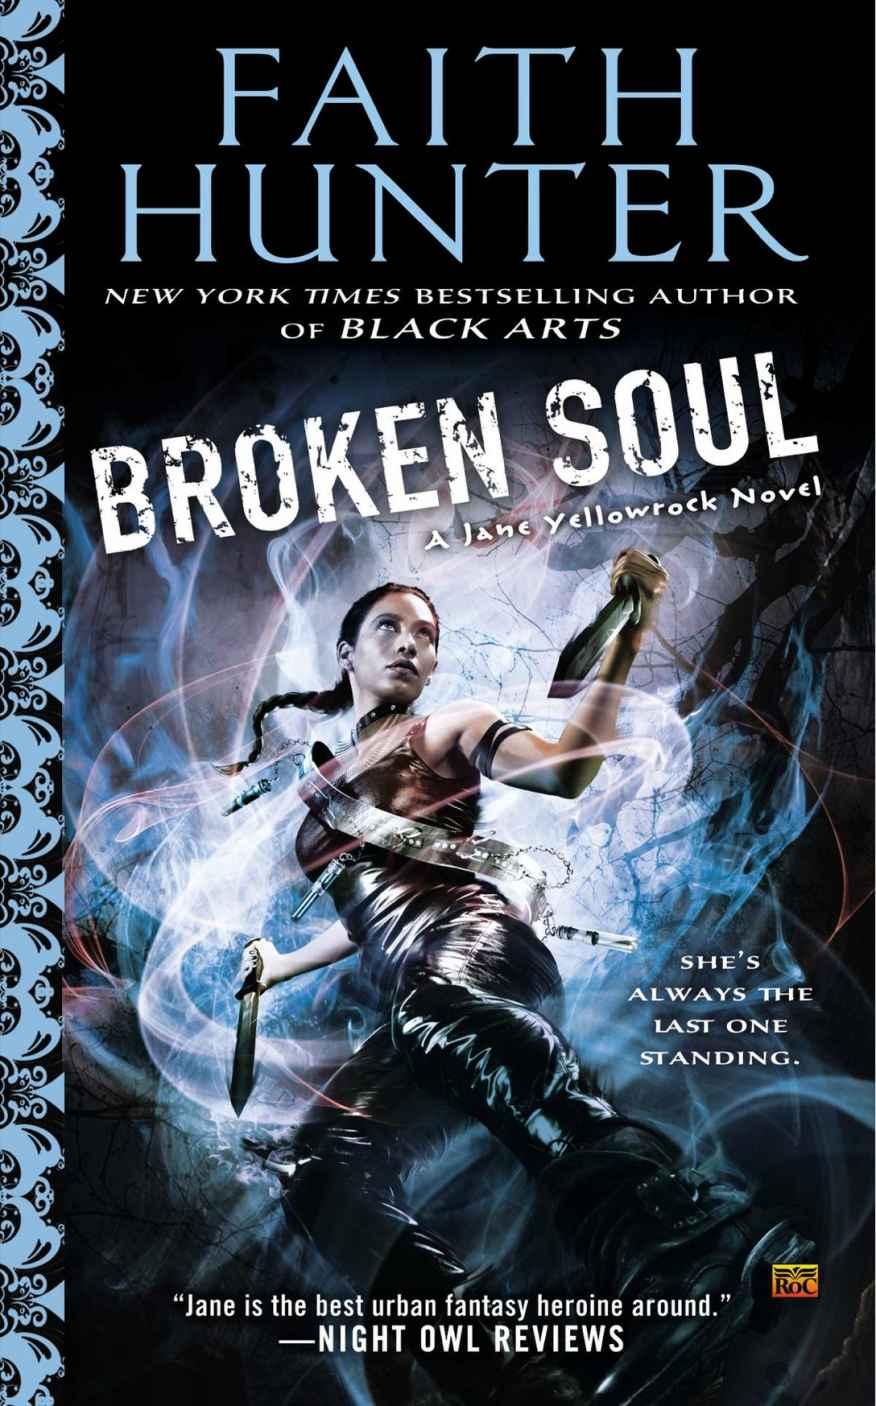 Broken Soul: A Jane Yellowrock Novel by Faith Hunter